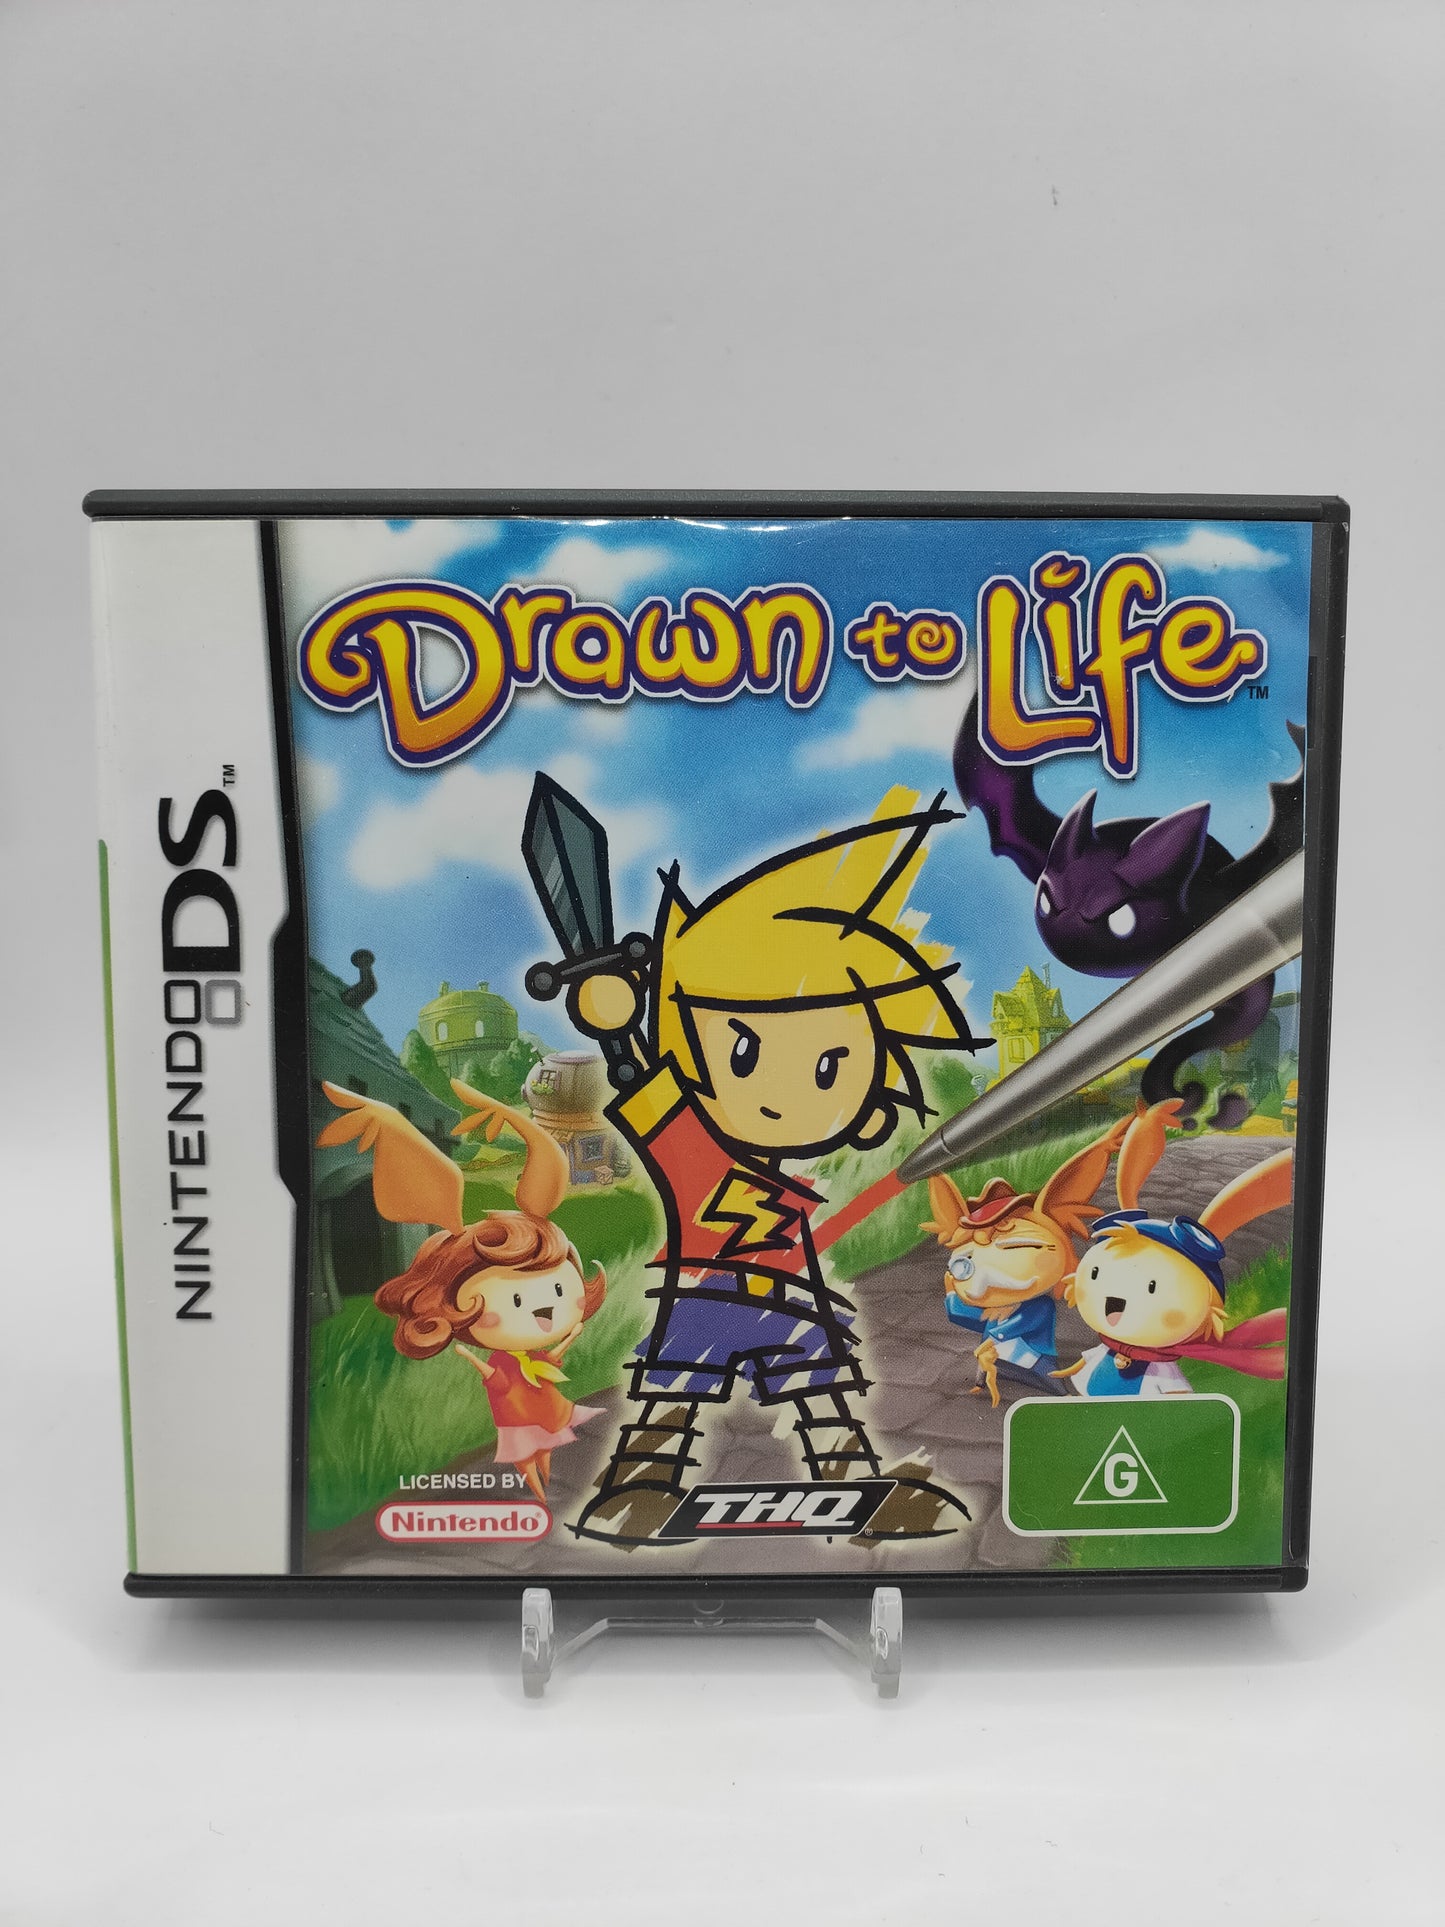 Drawn To Life Nintendo DS